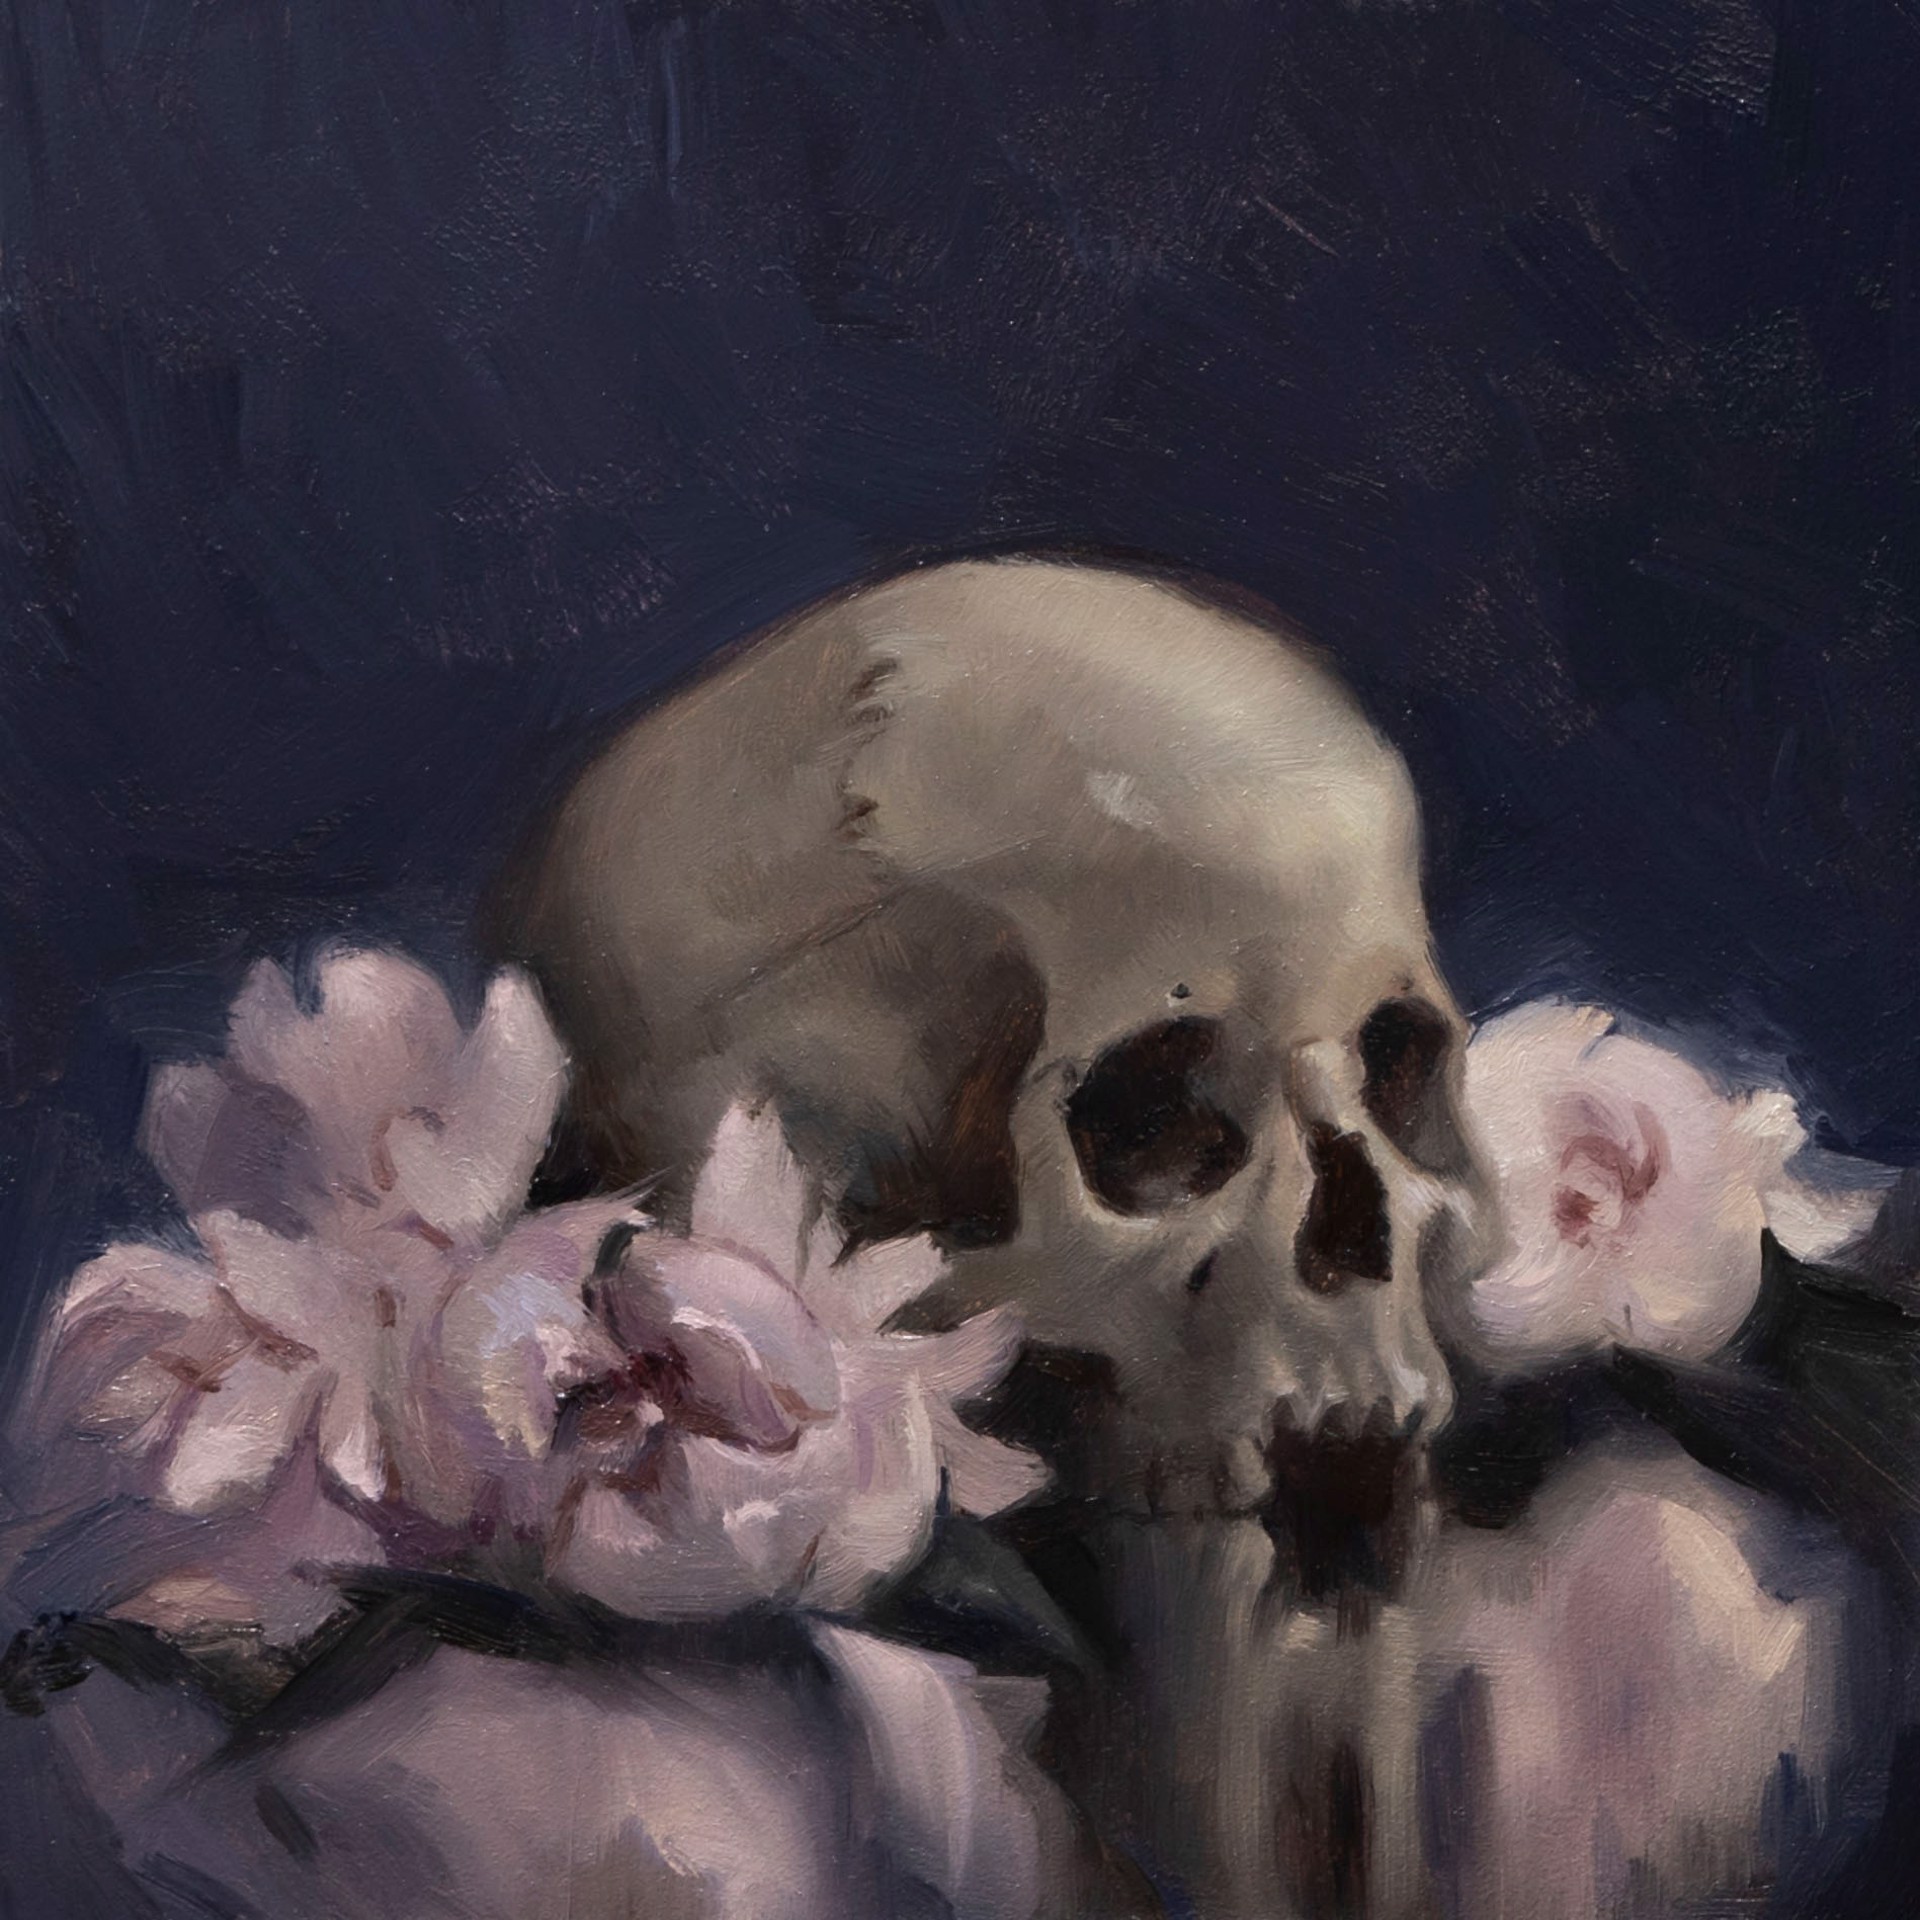 Skull & Peonies by Ximena Rendon